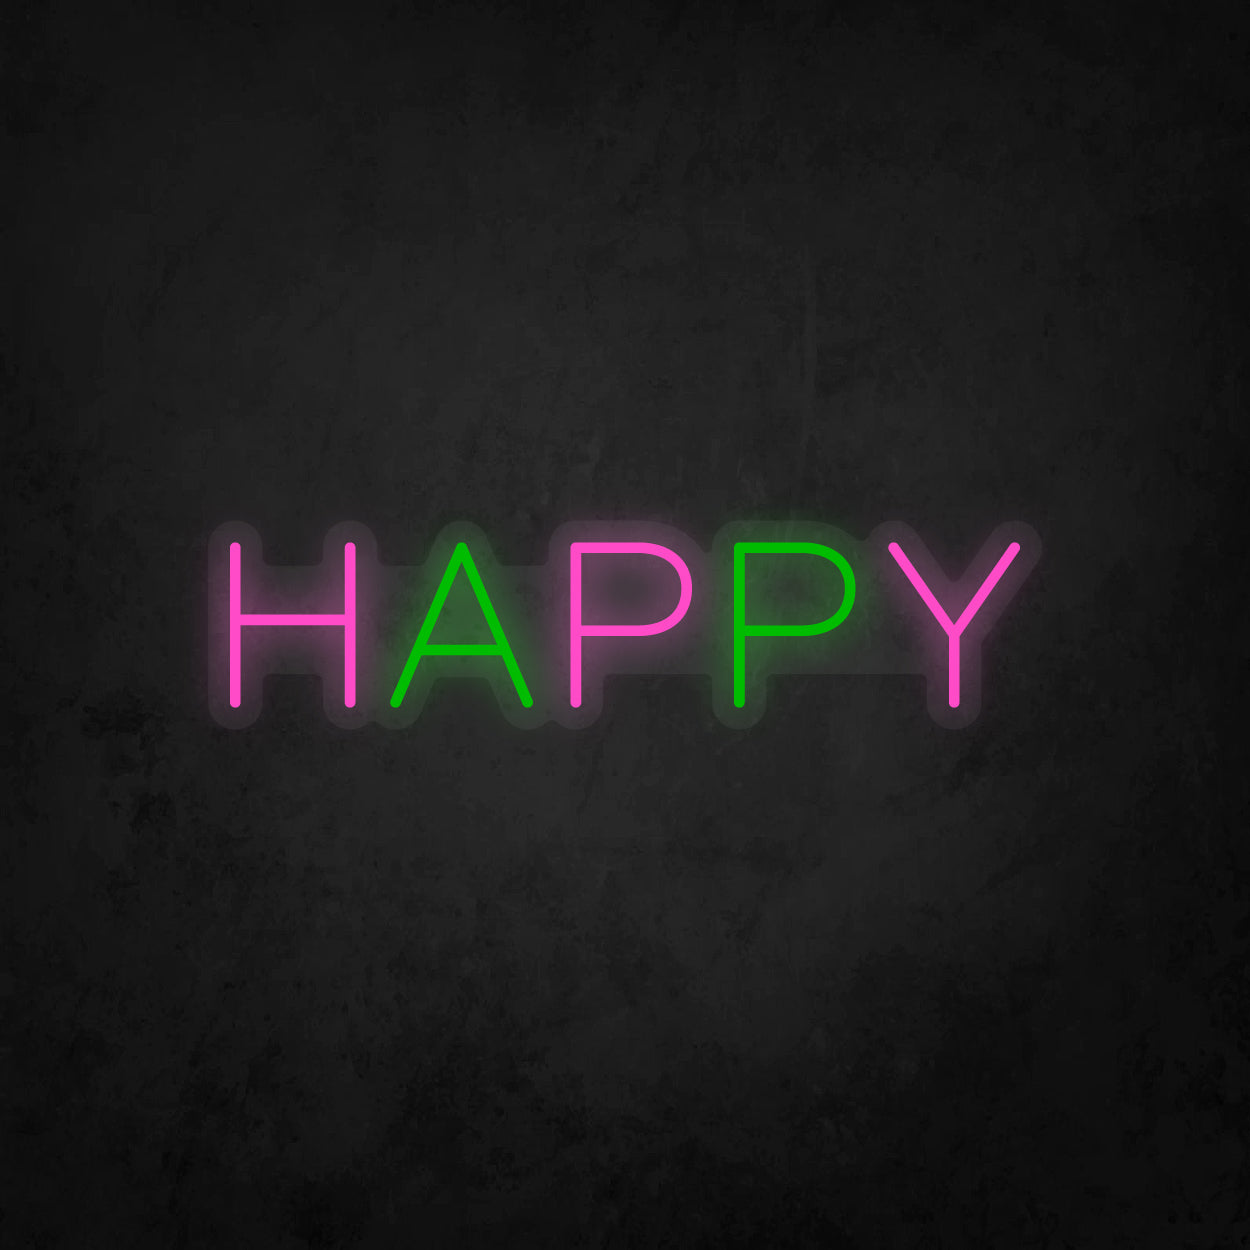 LED Neon Sign - Colorful Happy - Medium